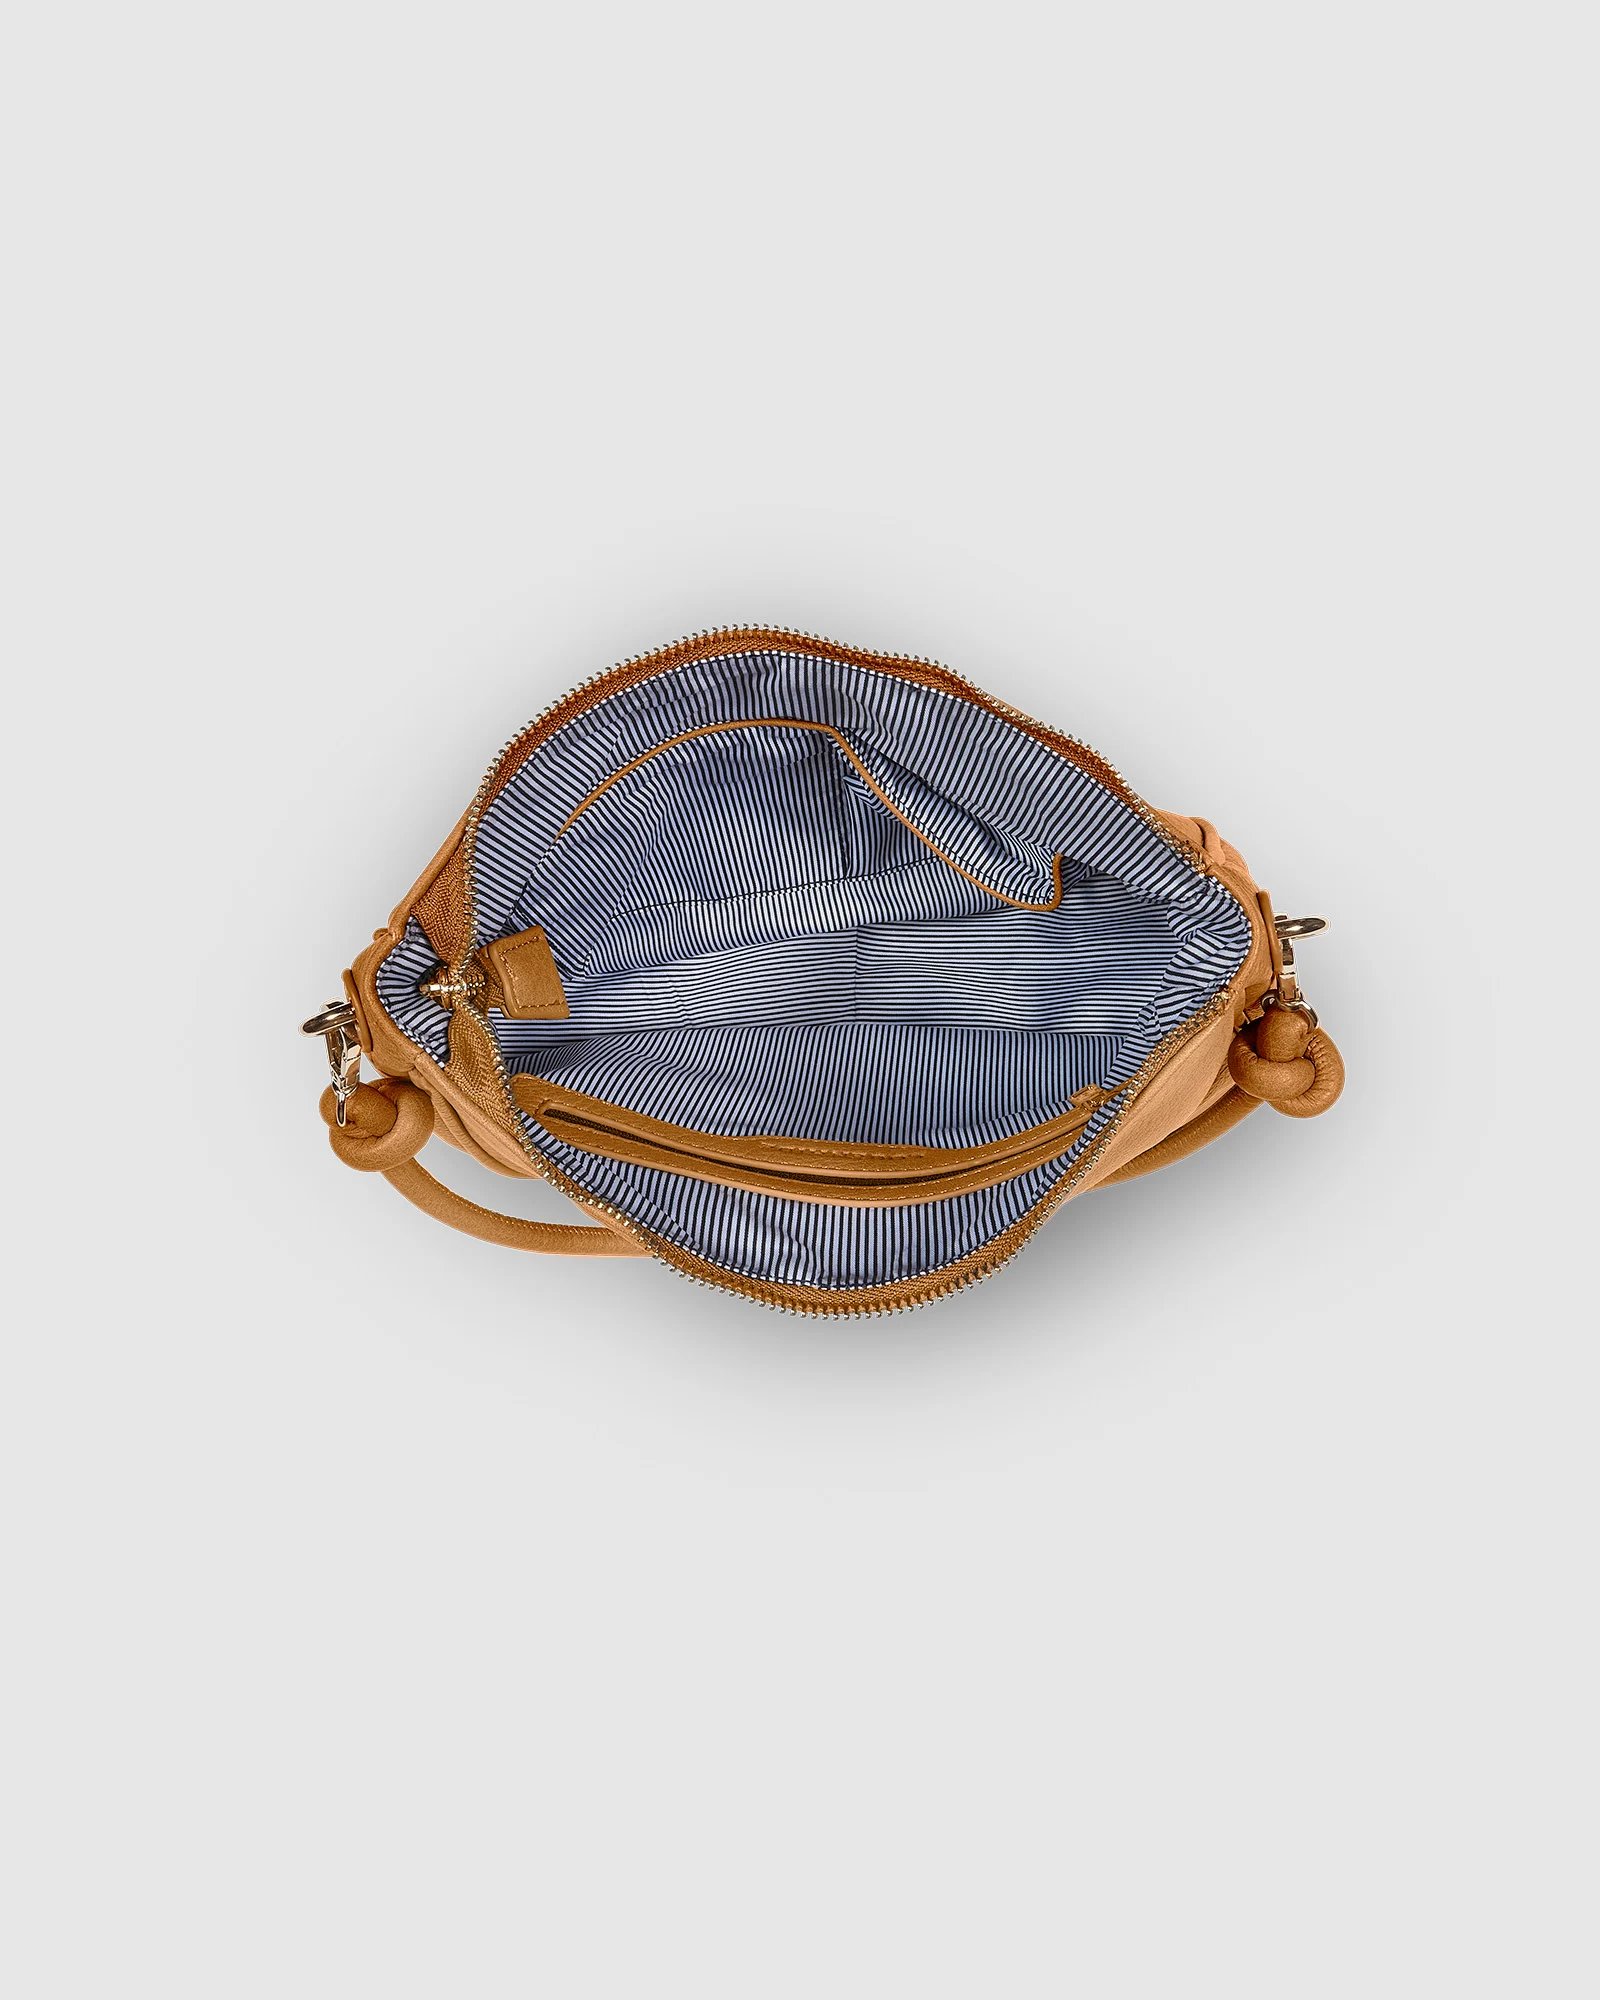 Louenhide Baby Remi Shoulder Bag - Camel Accessories - Other Accessories - Handbags & Wallets by Louenhide | Grace the Boutique